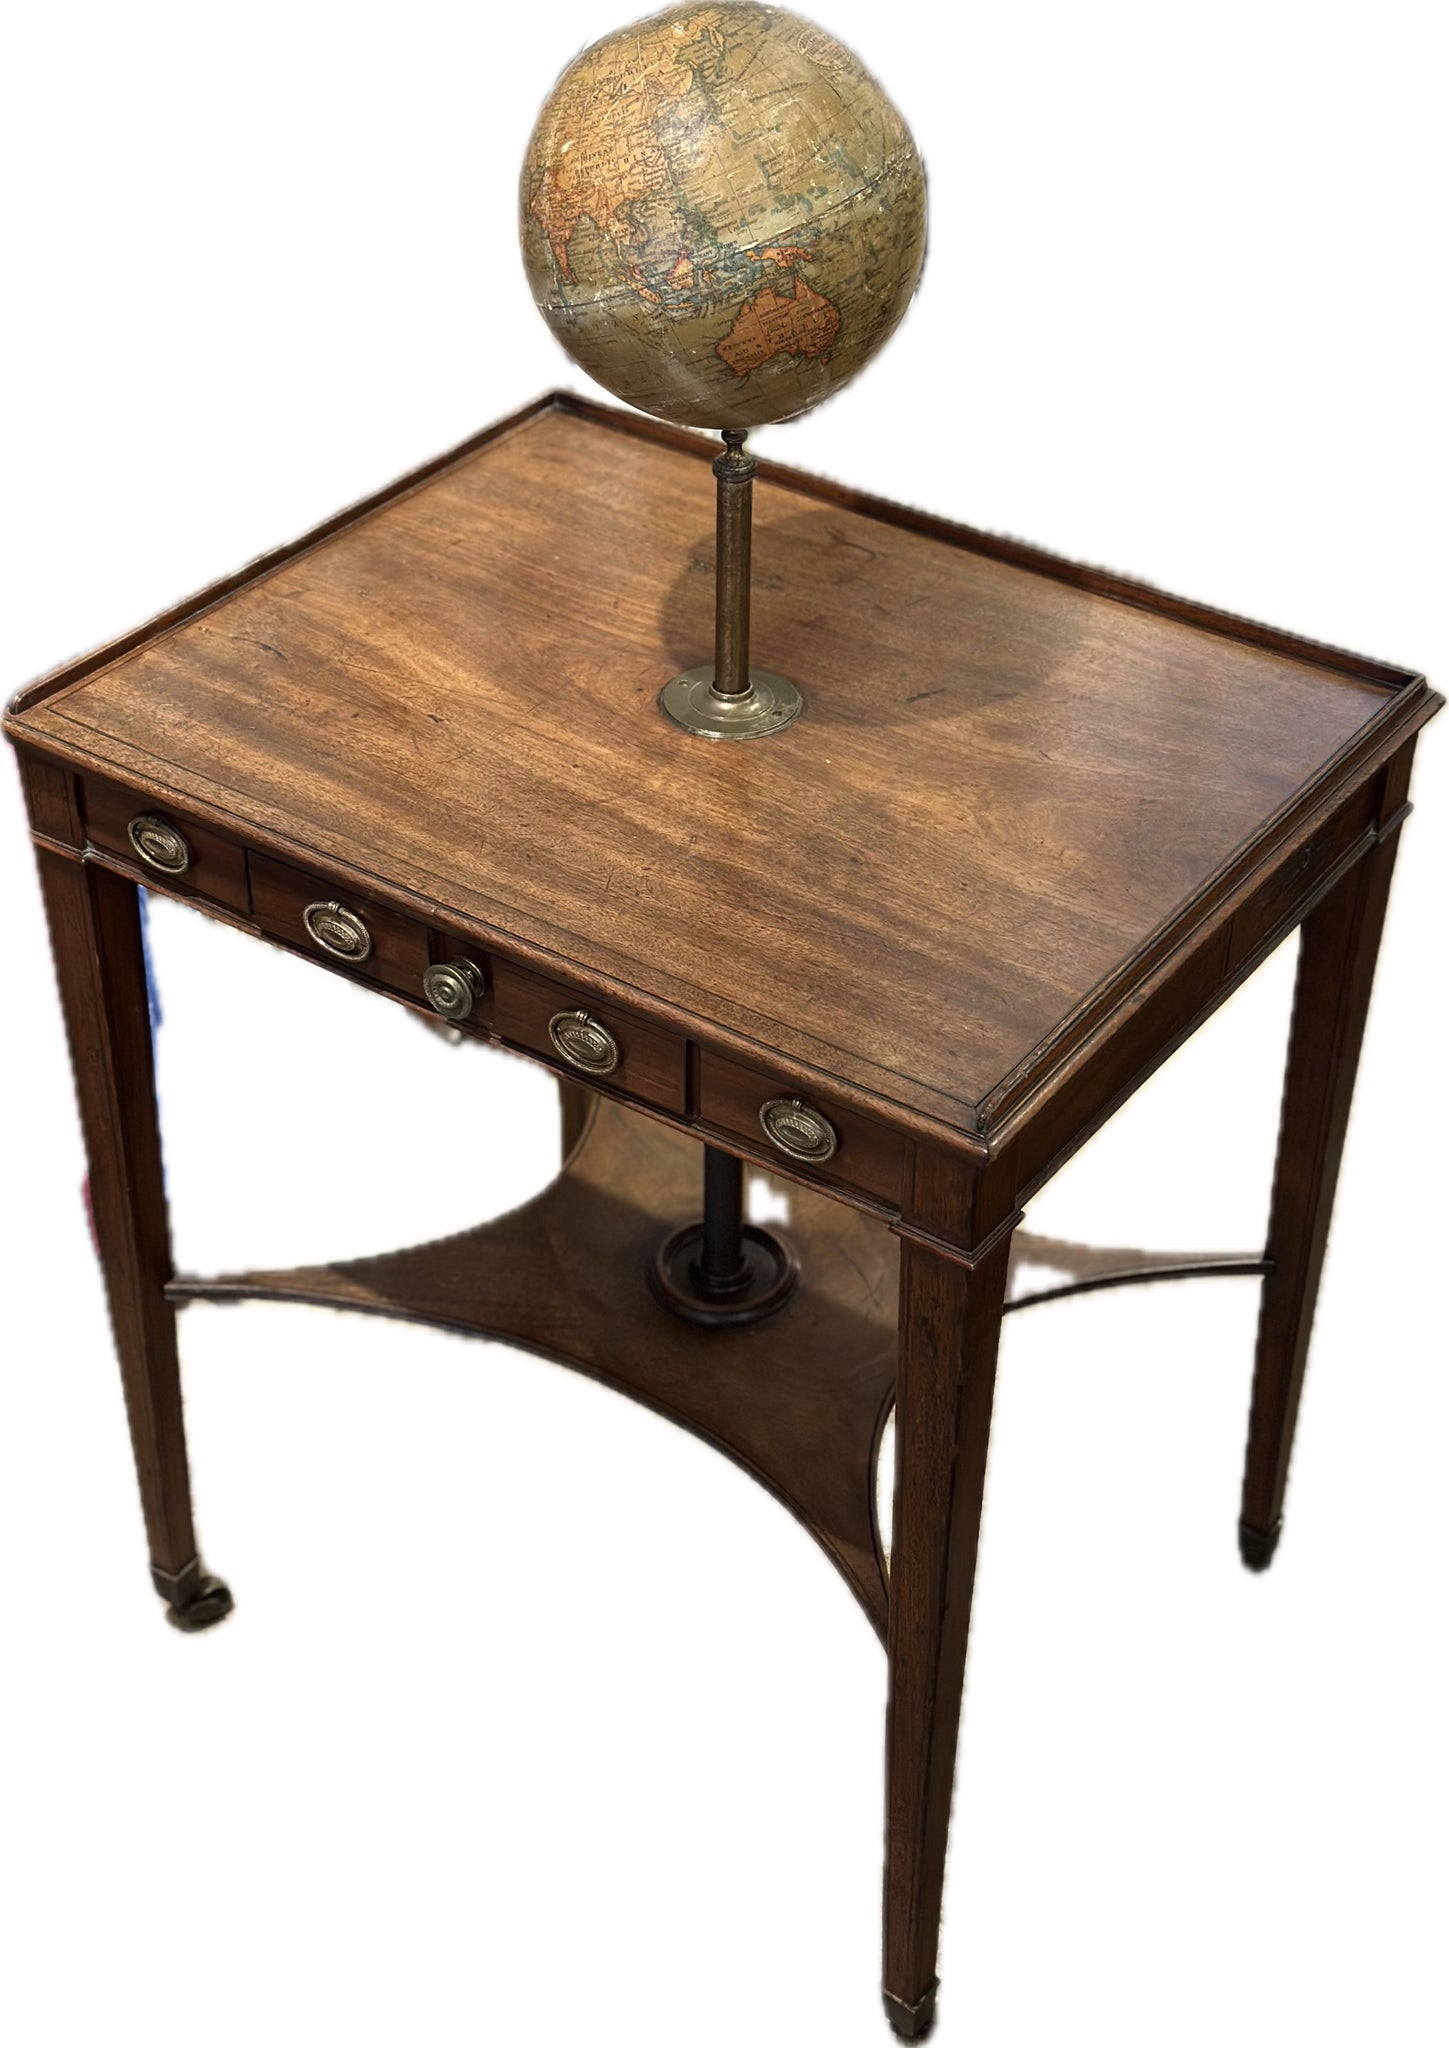 18th c English Globe Table